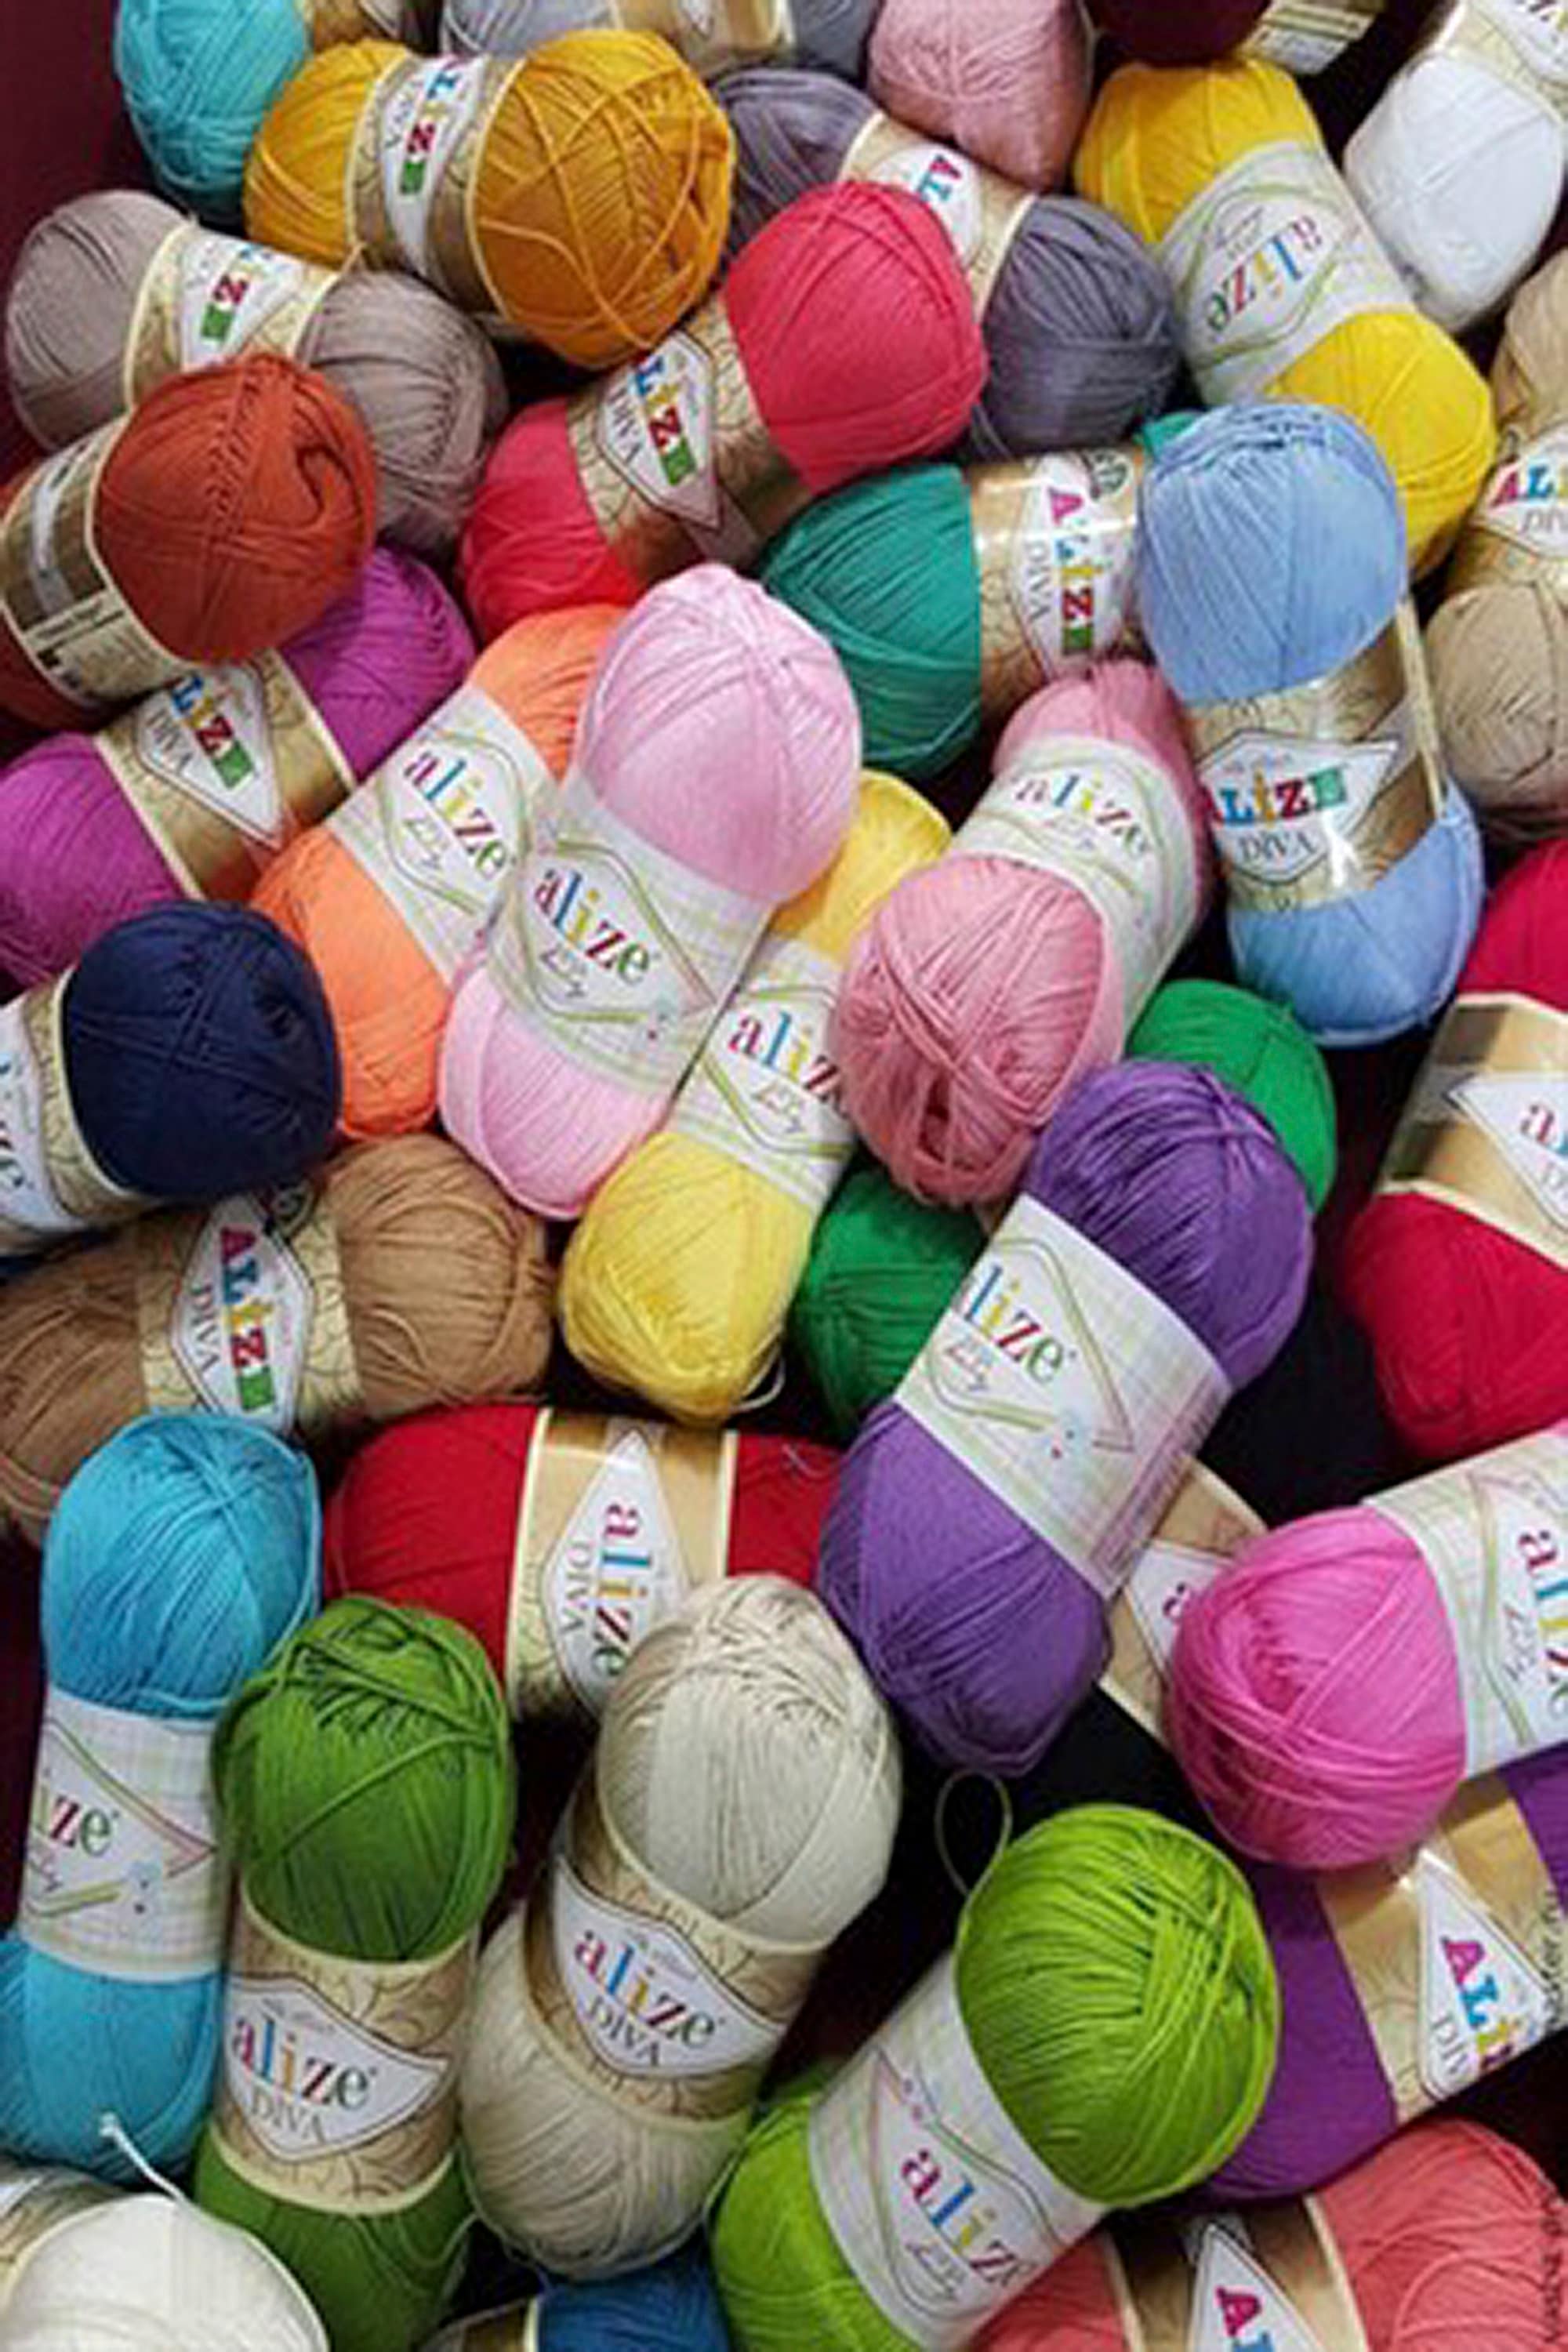 Alize Diva Yarn, 100% Acrylic, 100 Grams, 350 Meters, Yarn Accessories, Yarn  Afghan, Yarn Amigurumi, Yarn Animal, Yarn Art, Yarn Baby, Yarn 